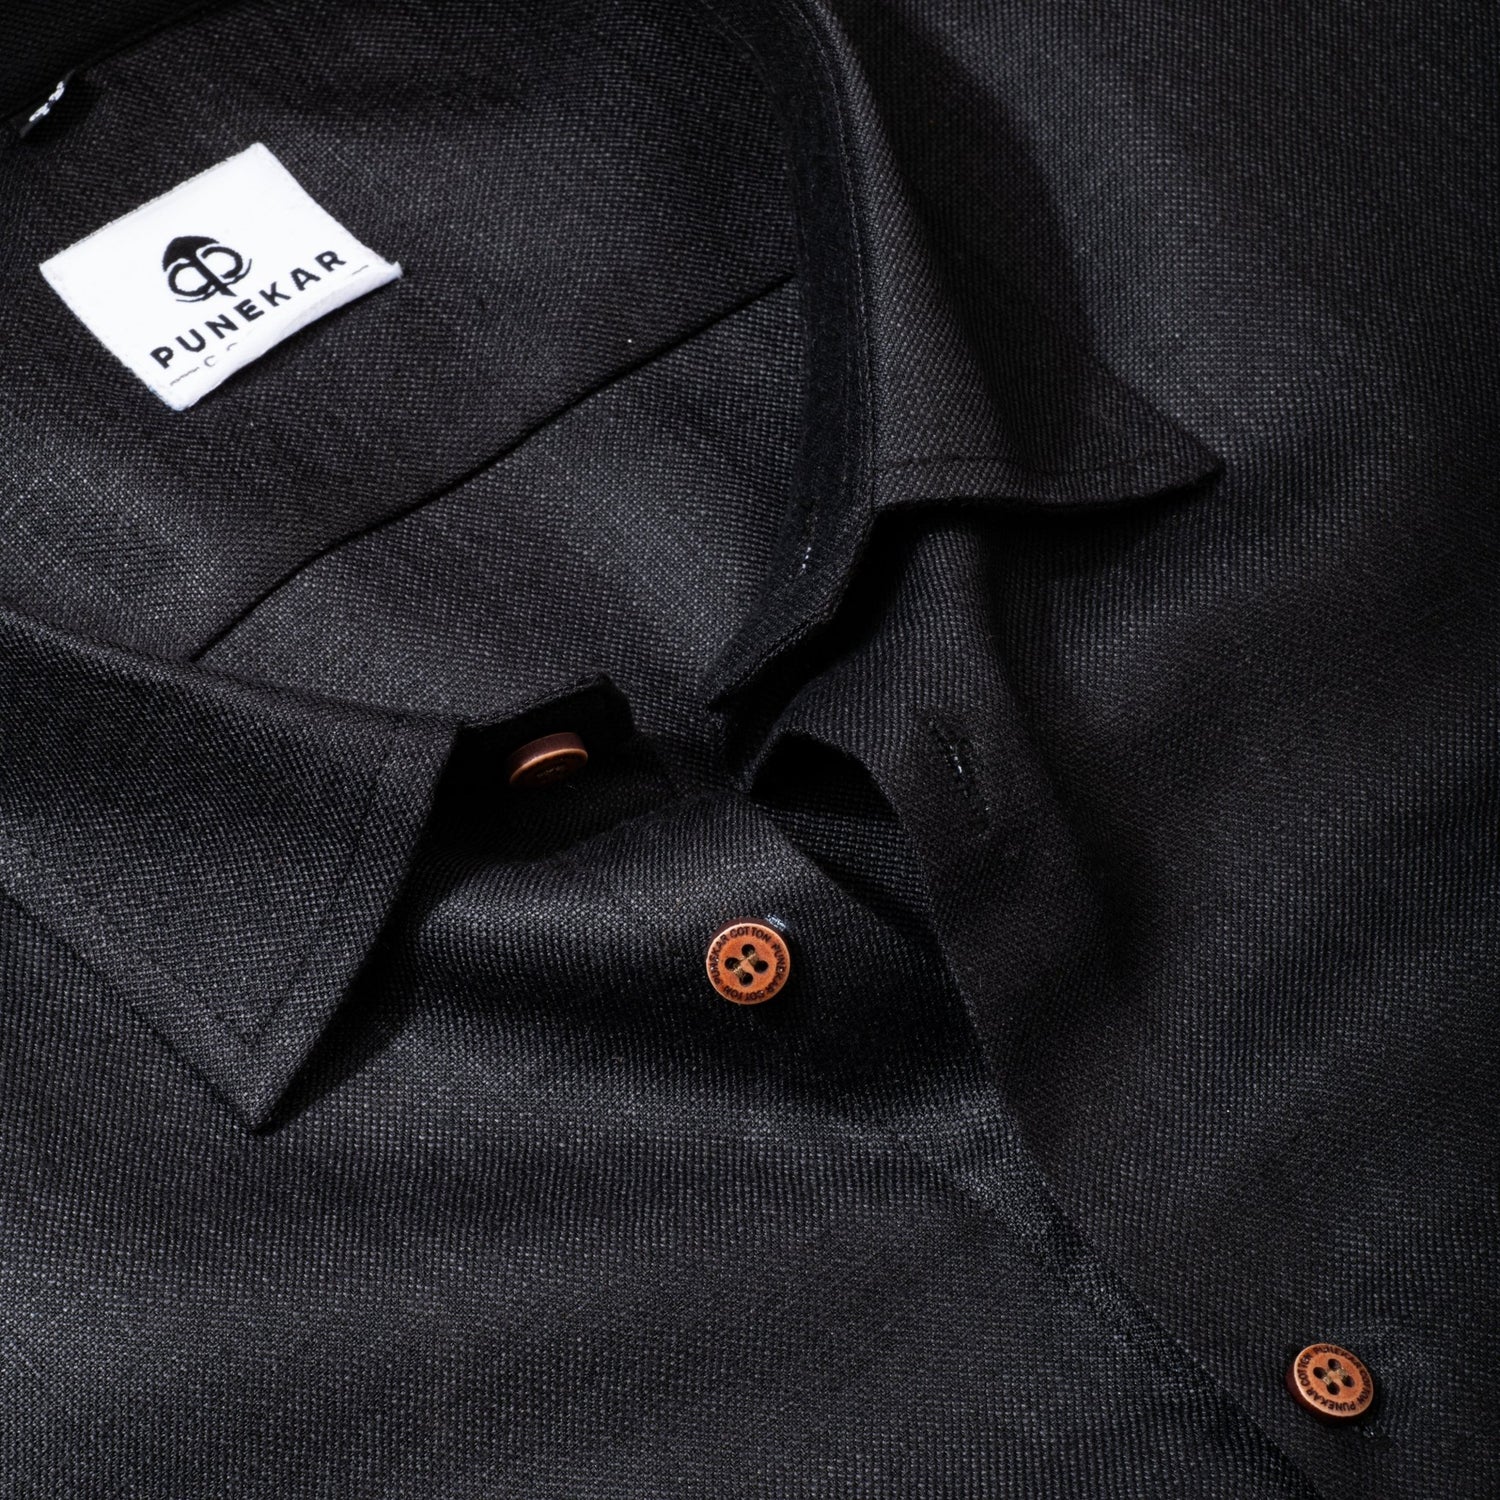 Black Color Blended Linen Shirt For Men's - Punekar Cotton